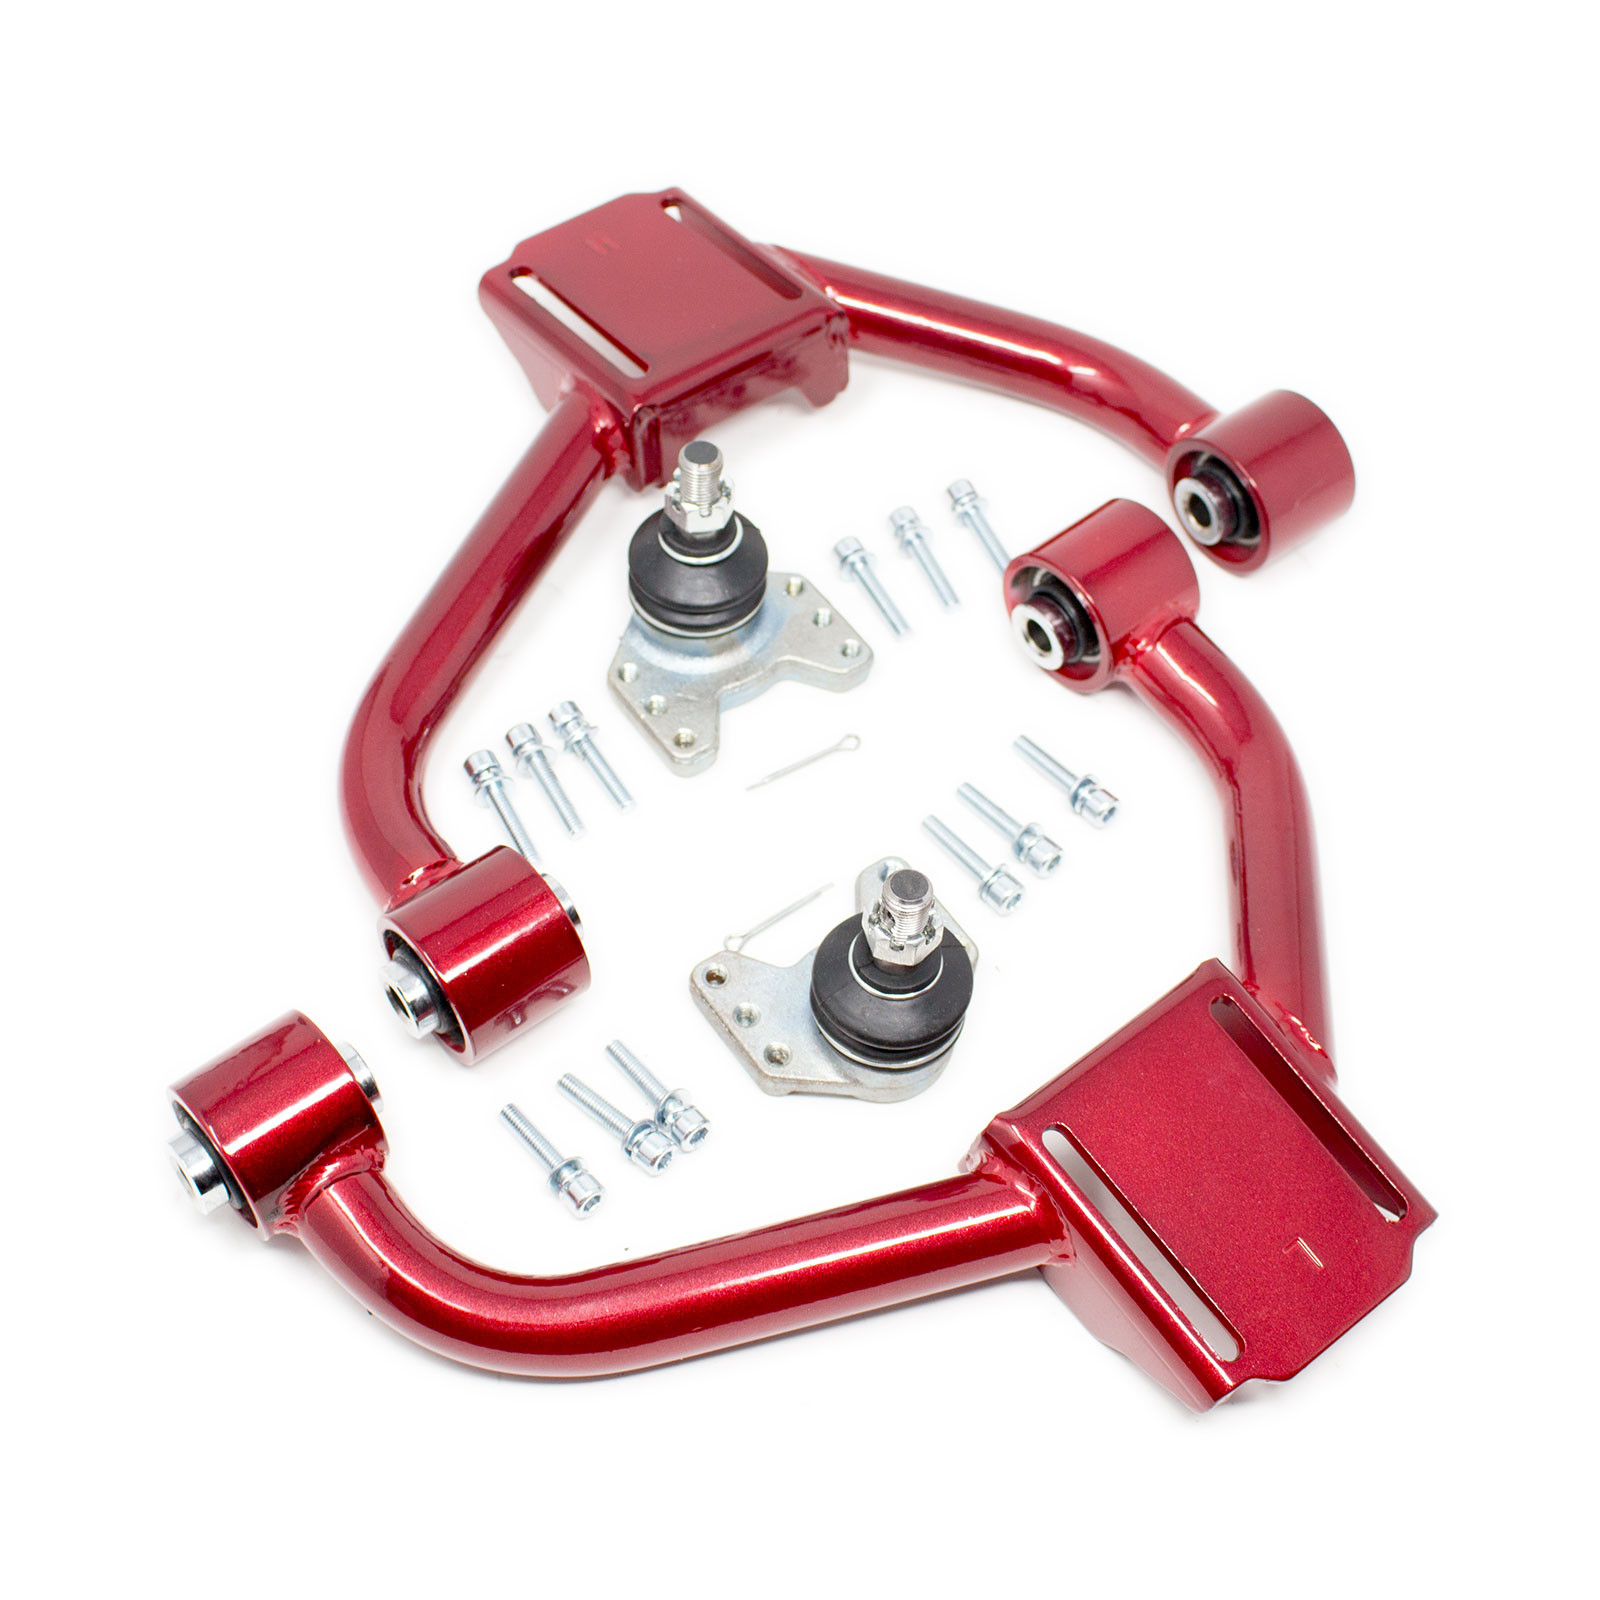 Mac Auto Parts Suspension Kit Control Arms Tie Ball Joint 6Pc for Lexus GS300 GS400 GS430 97-05 